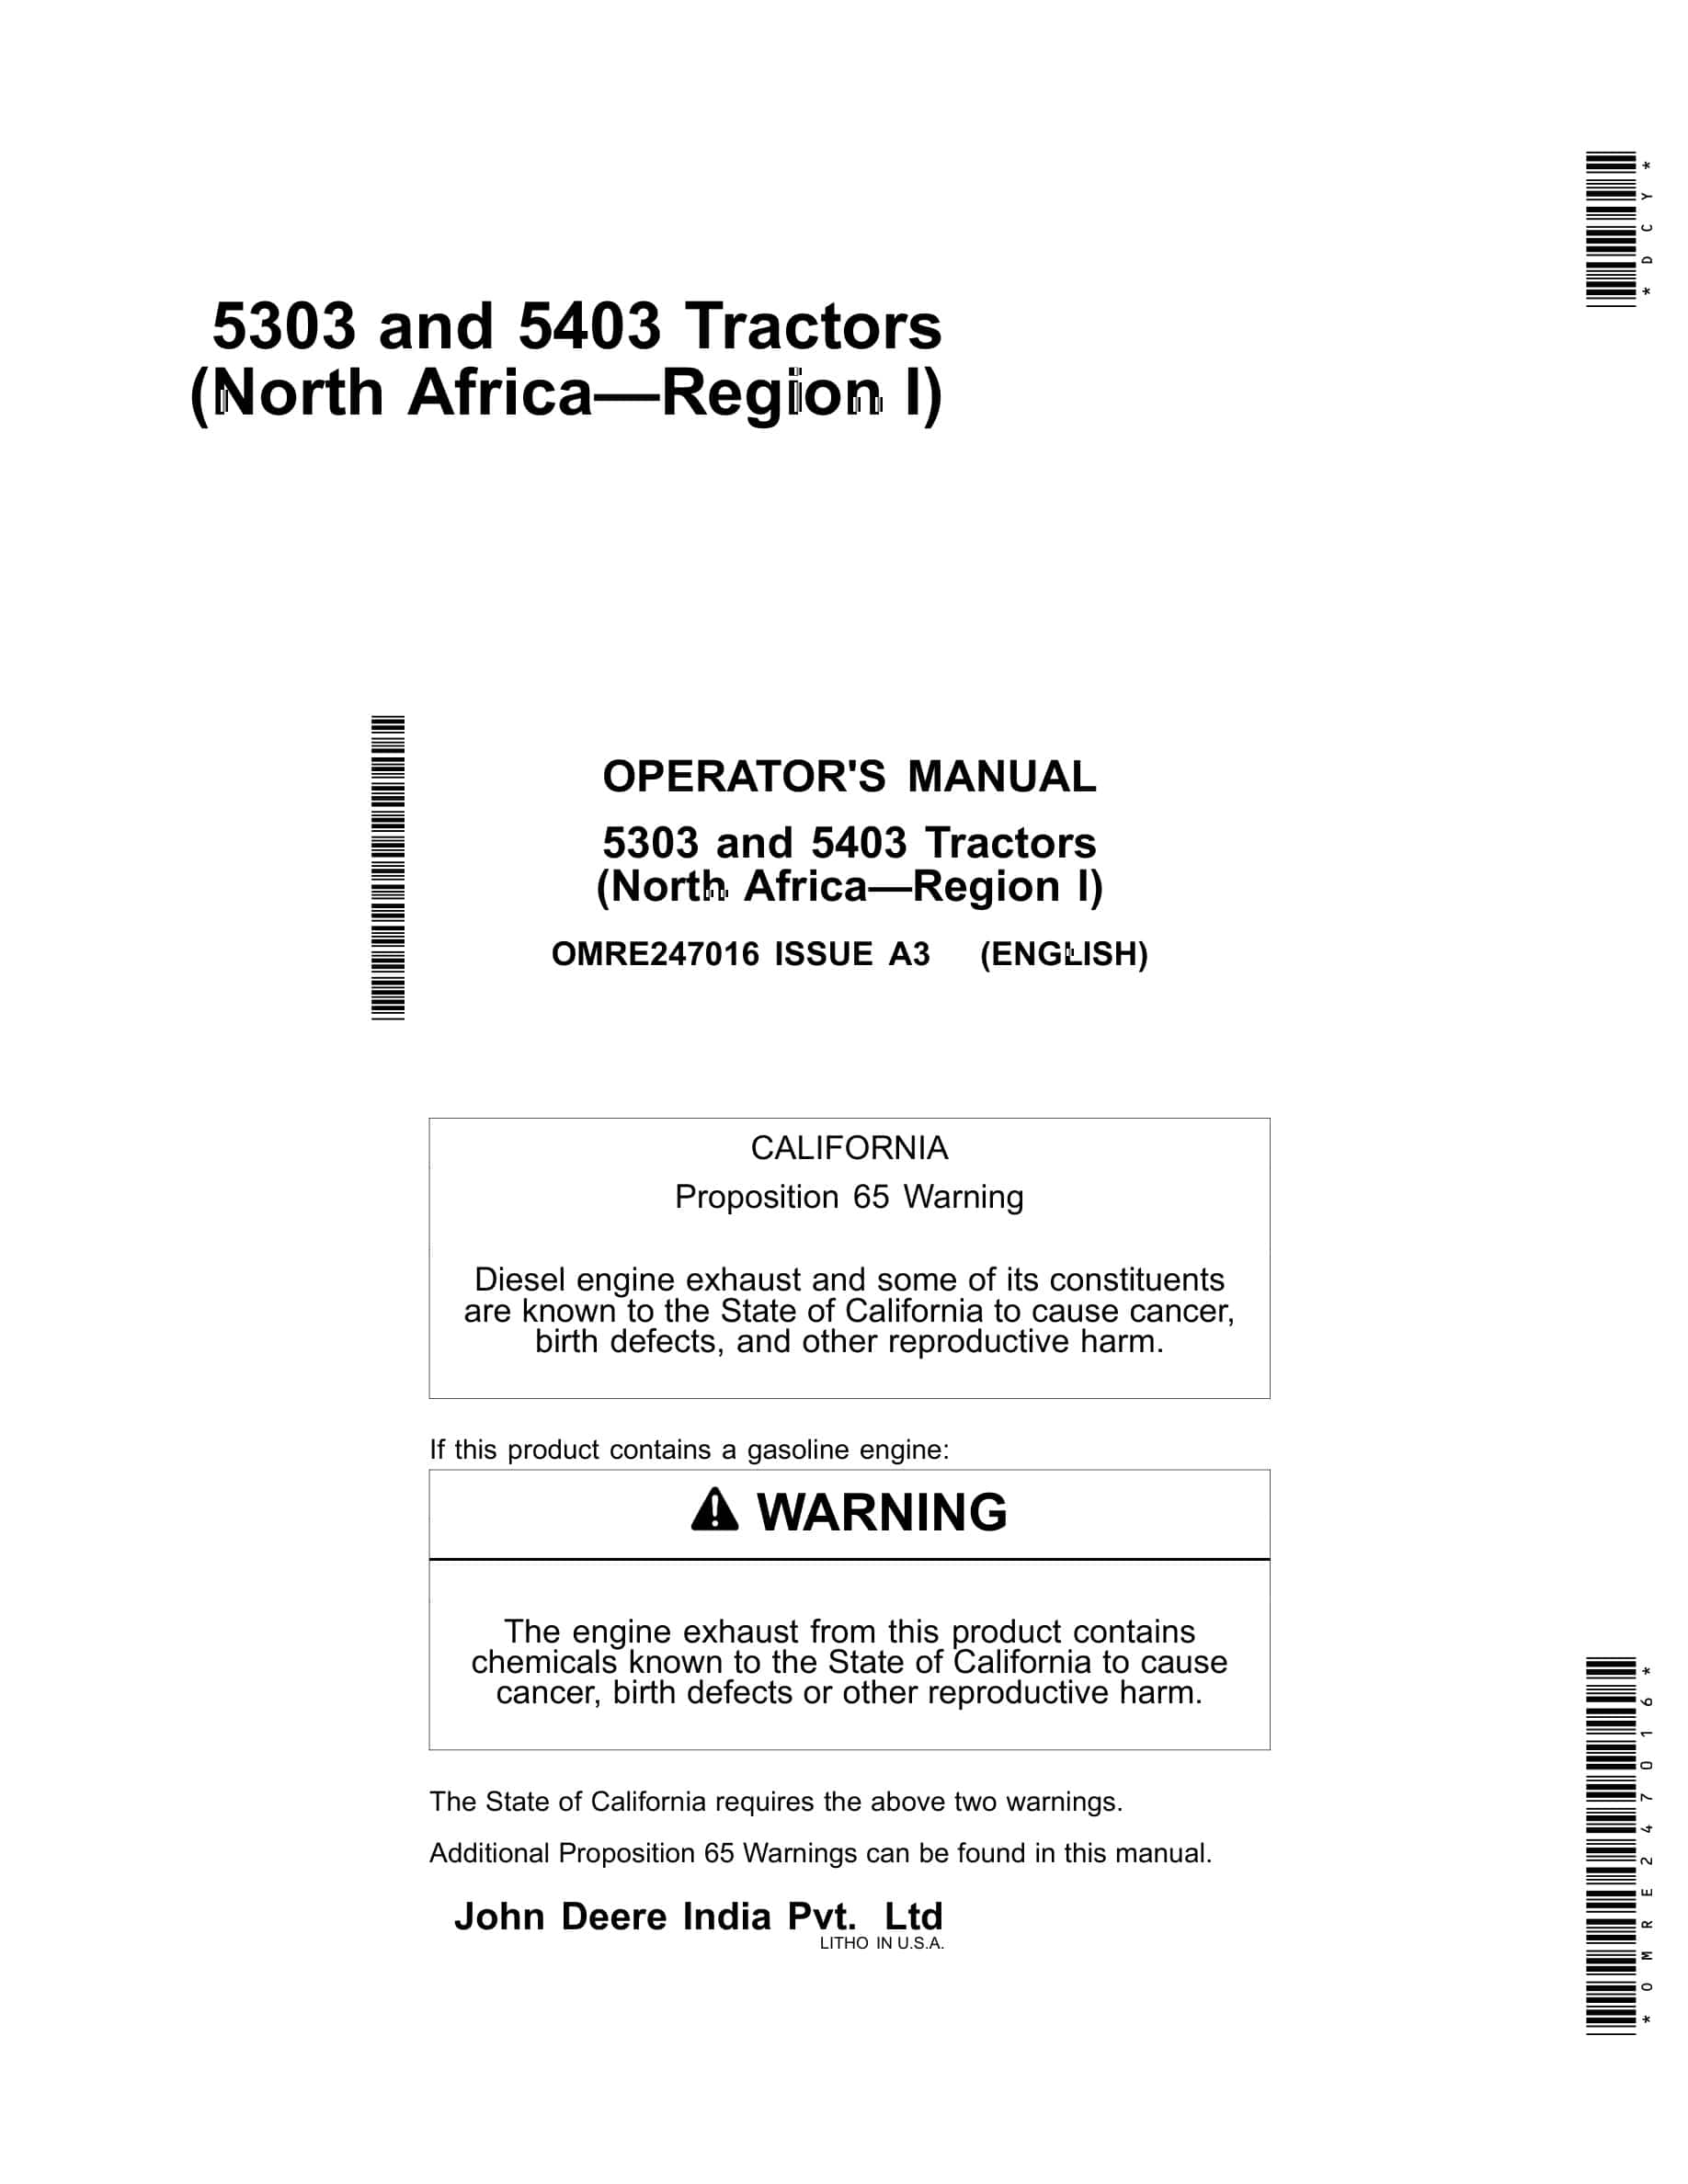 John Deere 5303 And 5403 Tractors Operator Manuals OMRE247016-1